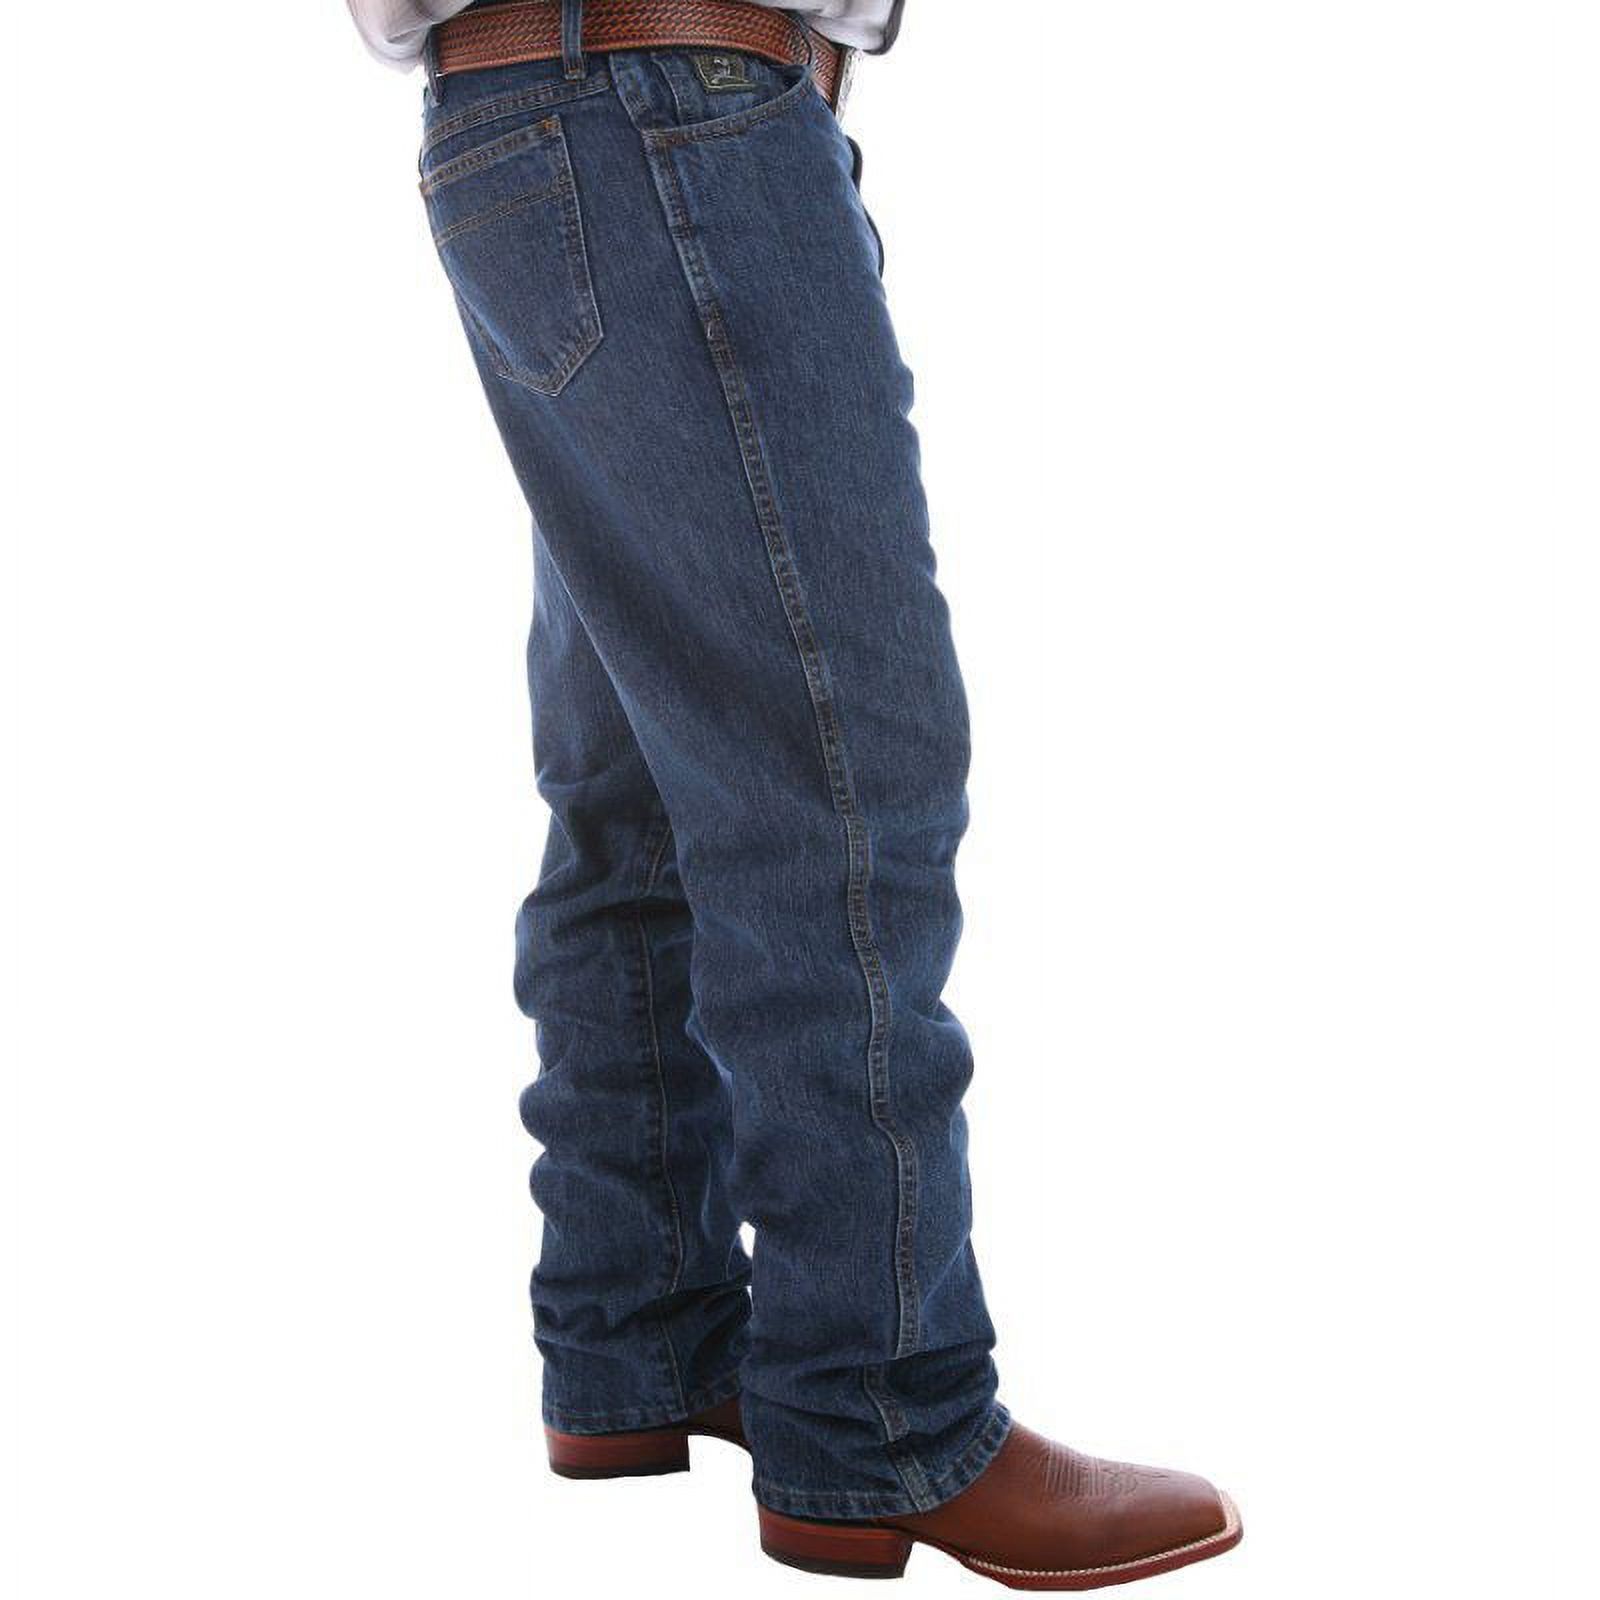 Cinch Apparel Mens Green Label Original Fit Jeans 46x38 Dark Stonewash - image 2 of 4